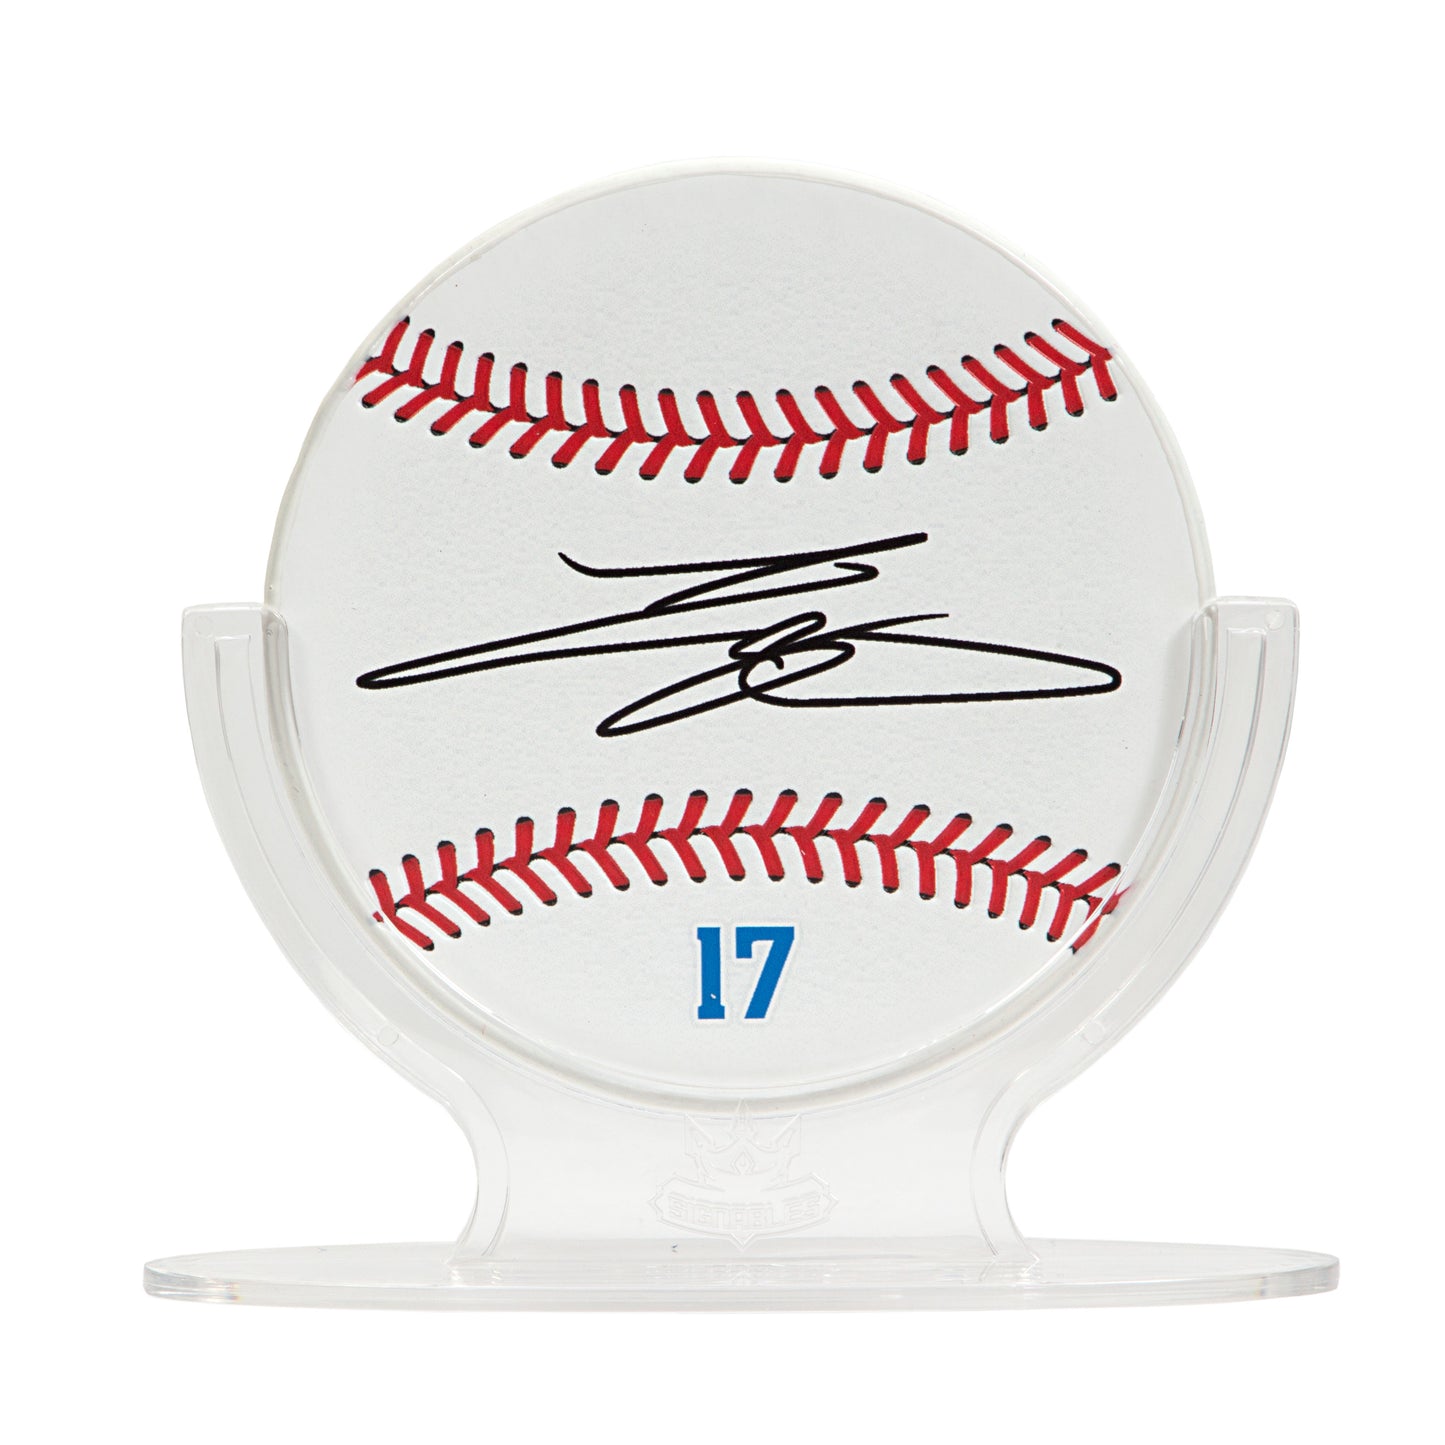 Shohei Ohtani MLBPA 2024 Collection Signables Baseball Sports Collectible Digitally Signed